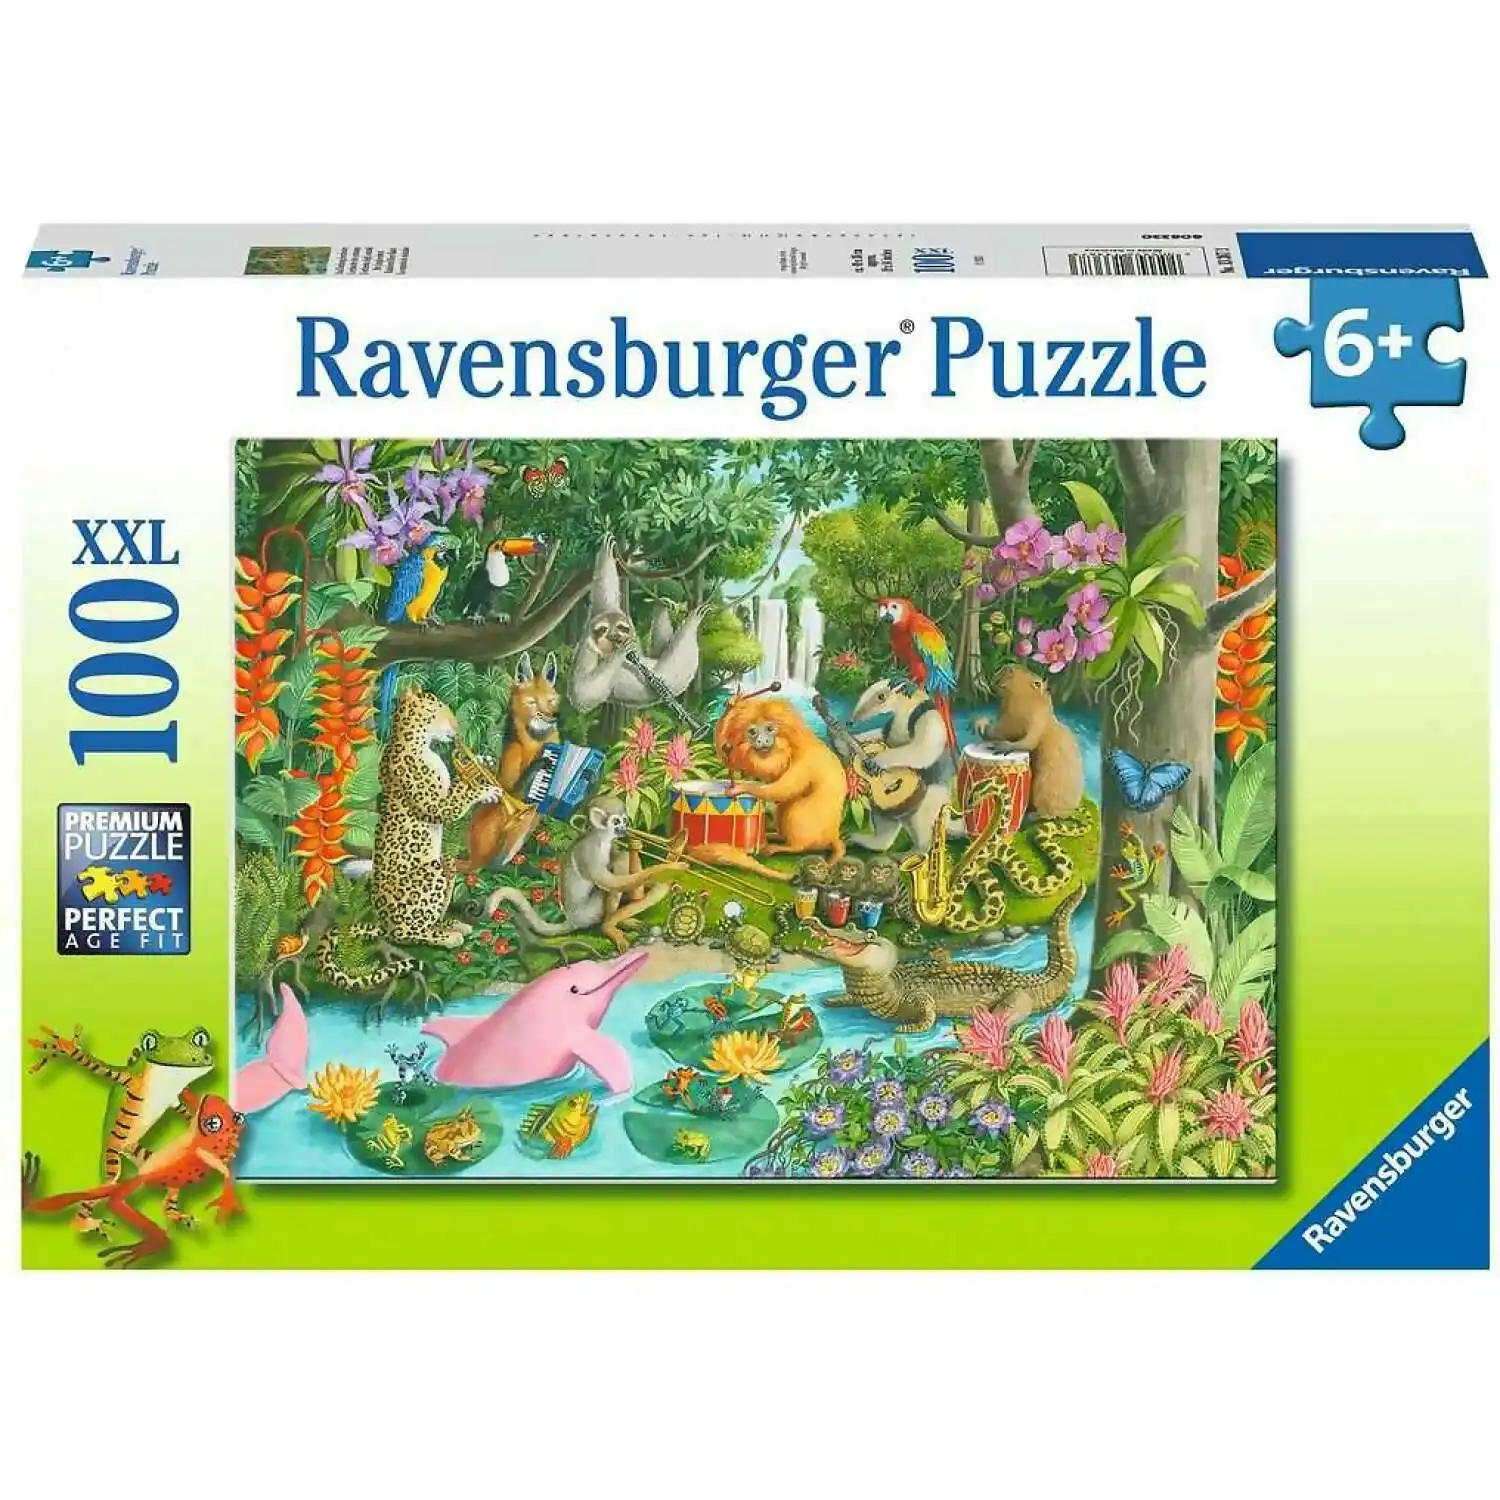 Ravensburger - Rainforest River Band Jigsaw Puzzle XXL 100pc